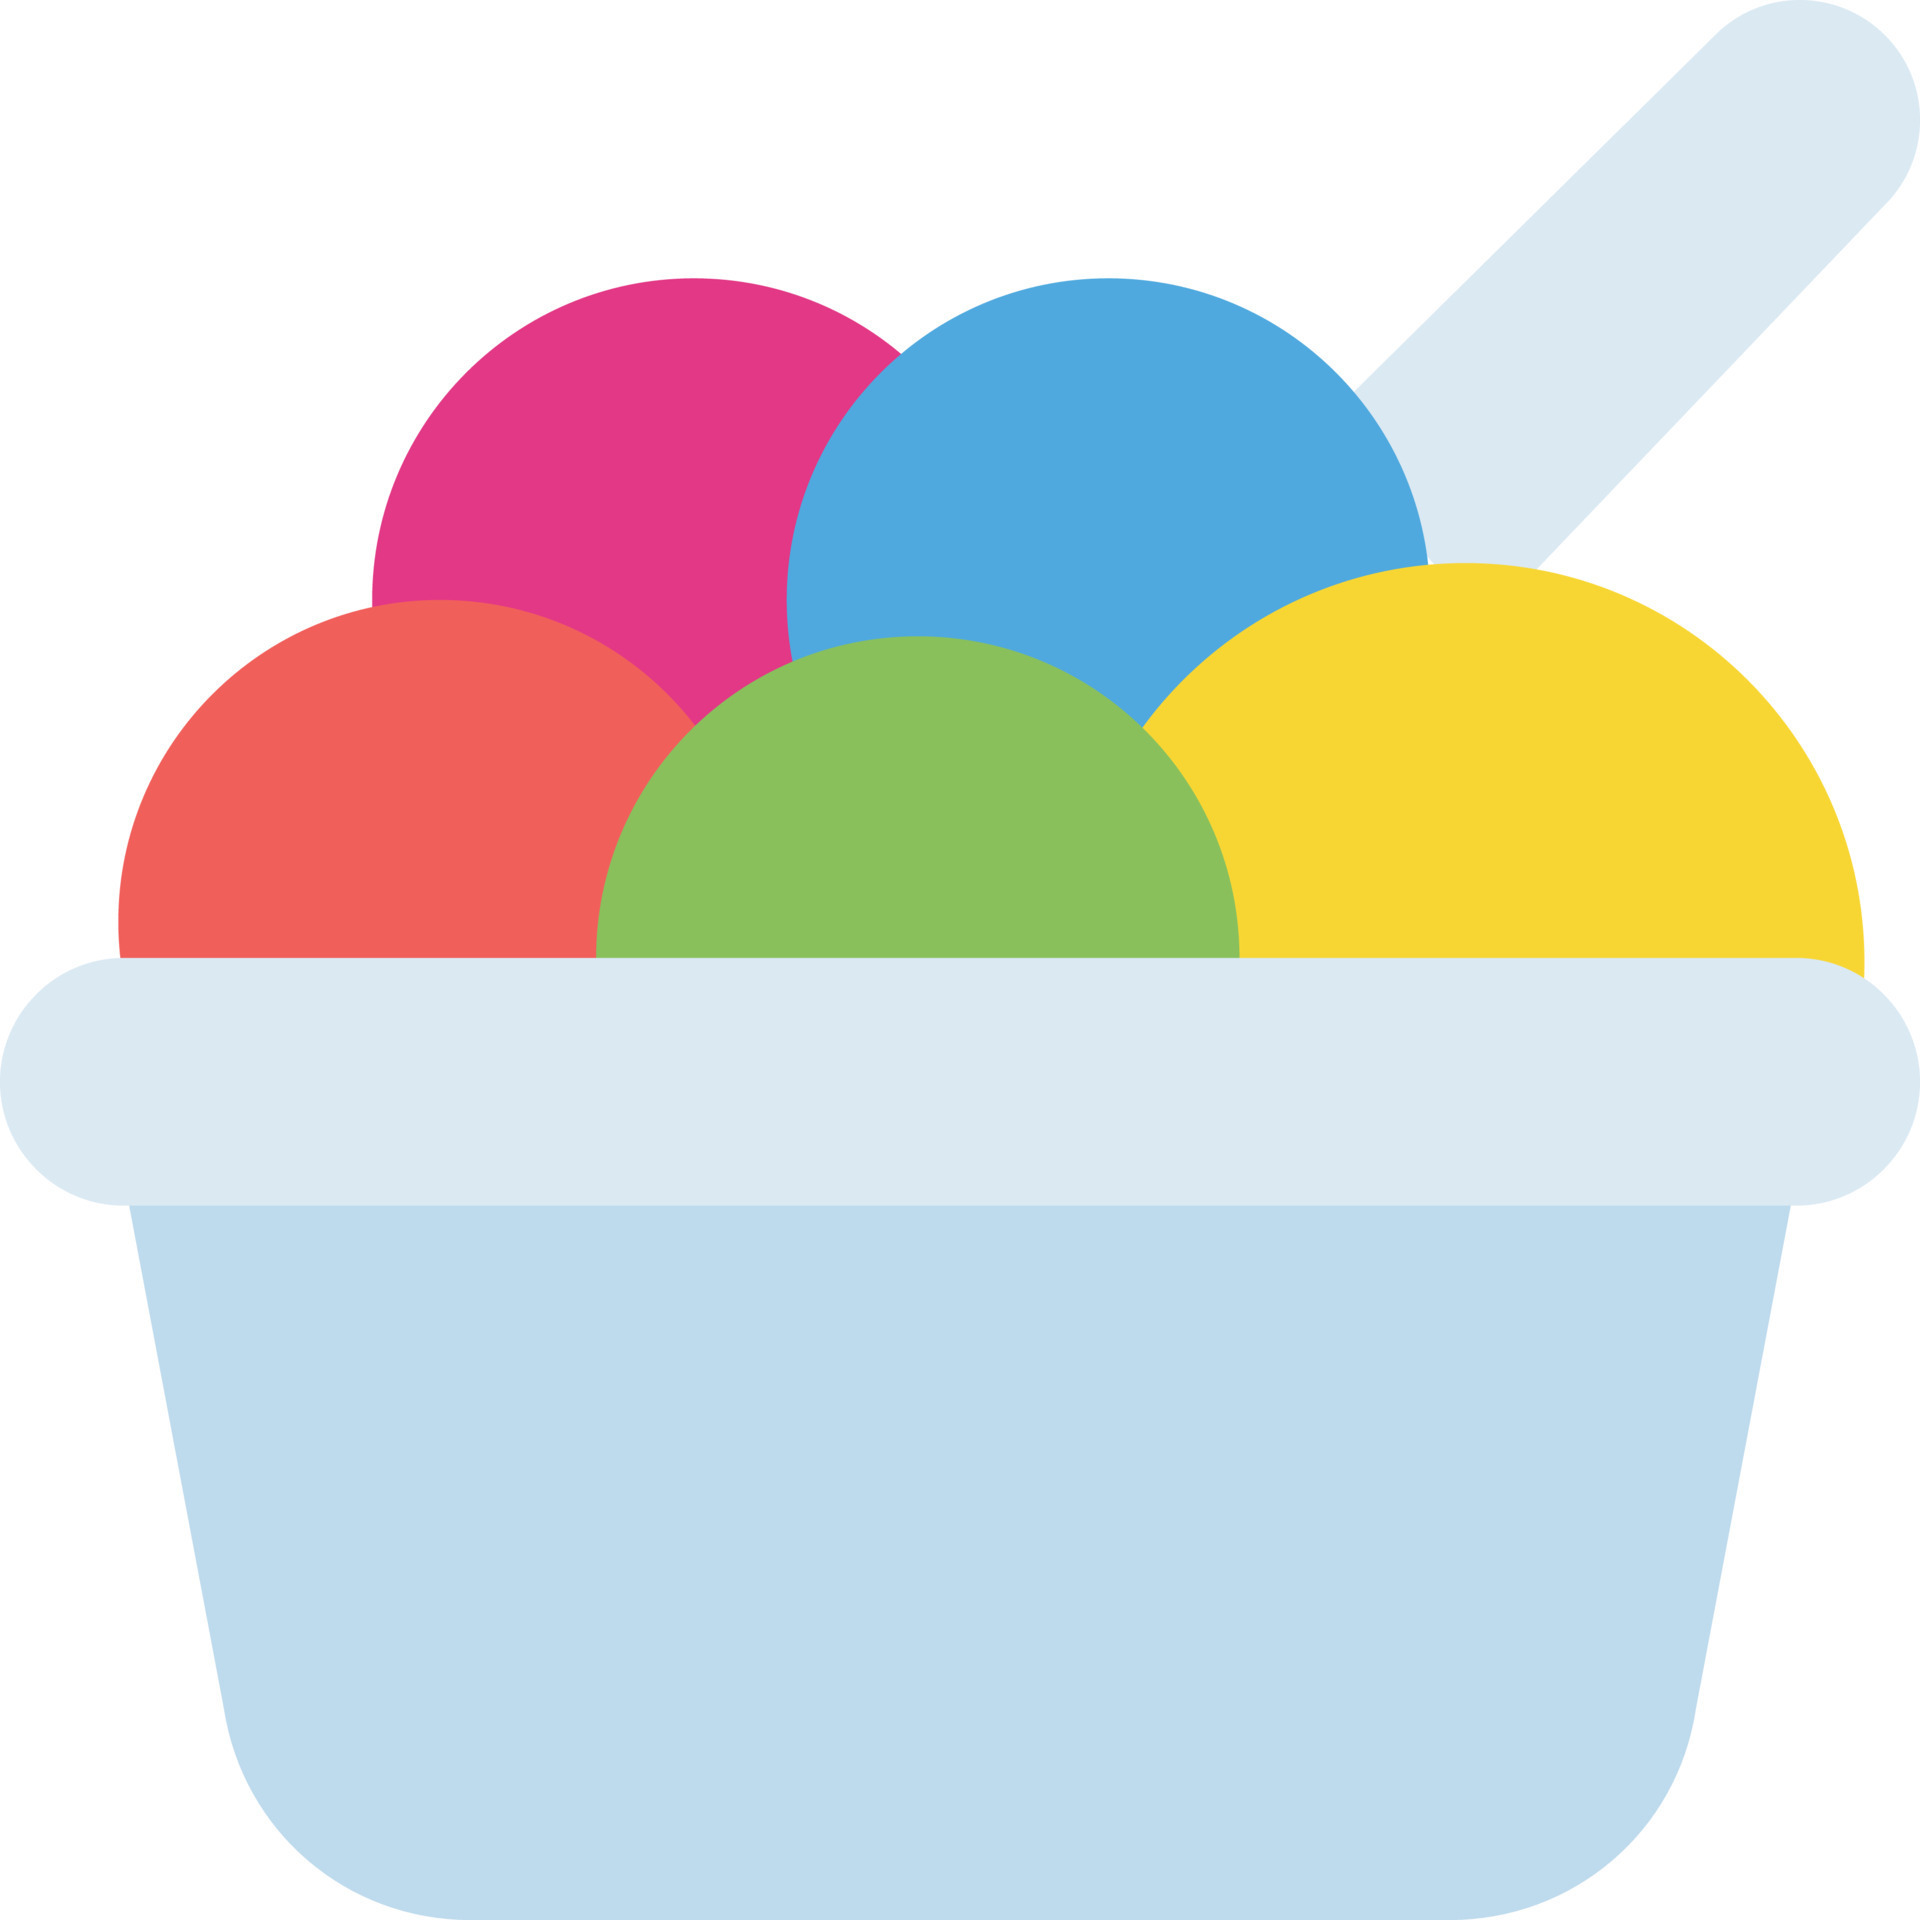 ice cream scoope vector illustration on a background.Premium